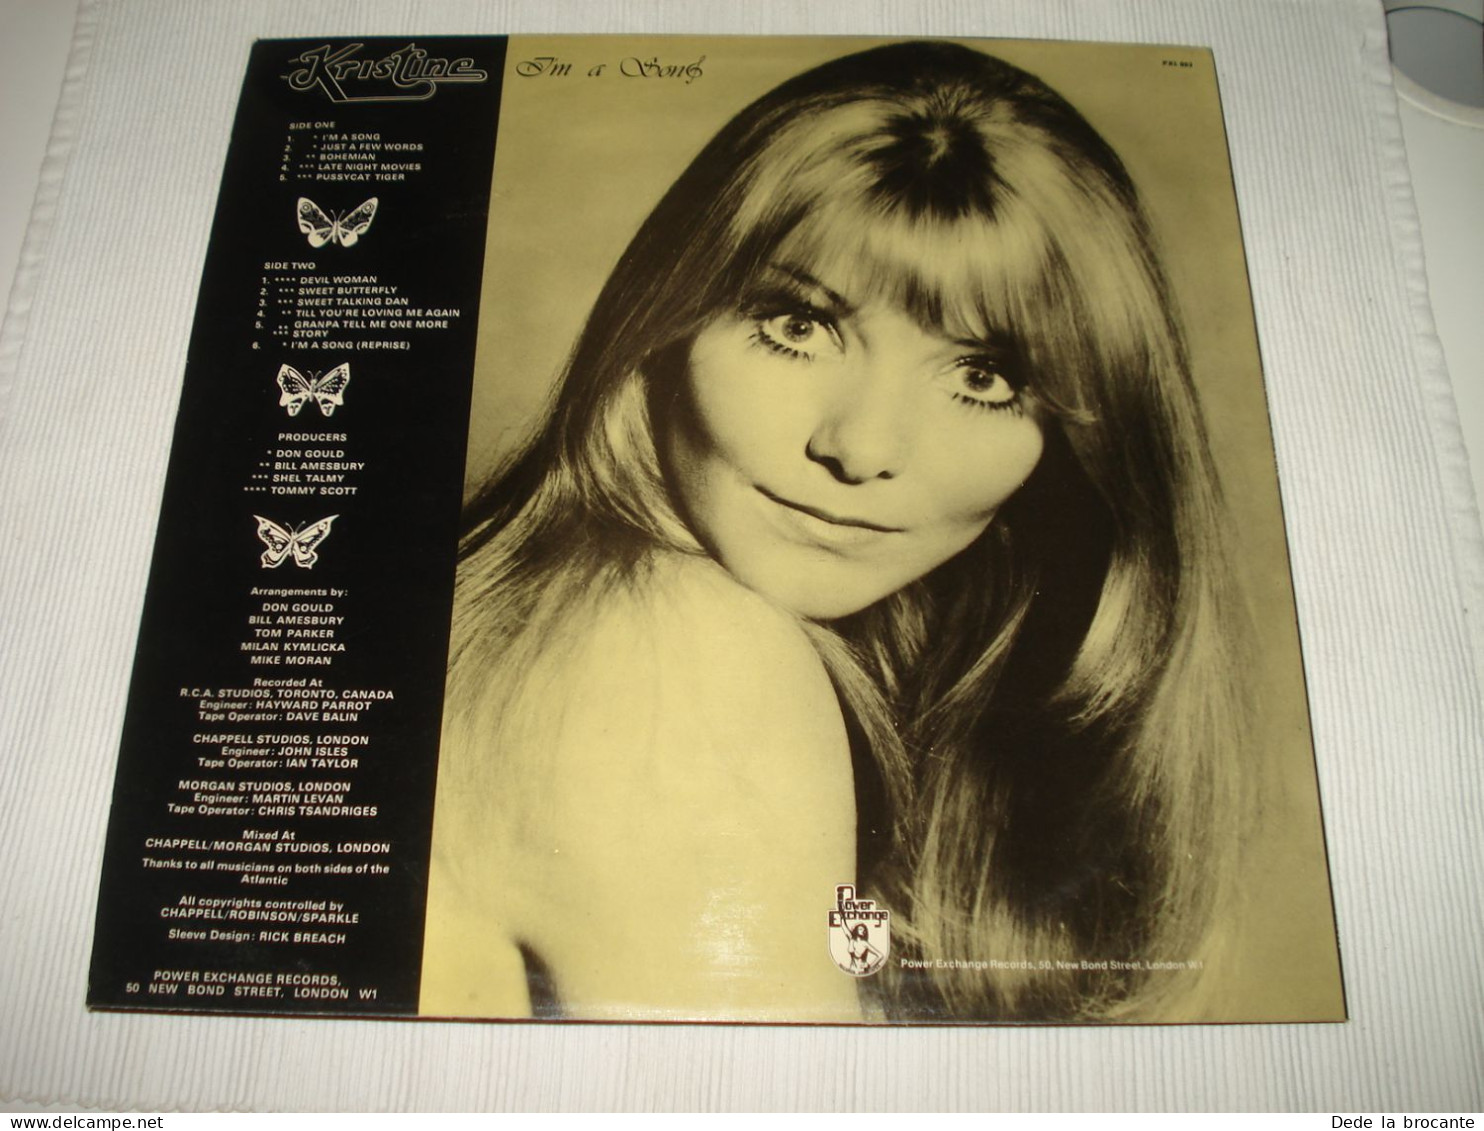 B10 / Kristine – I'm A Song - LP -  Power Ex Records - PXL 003  - UK 1976 - M/NM - Country & Folk